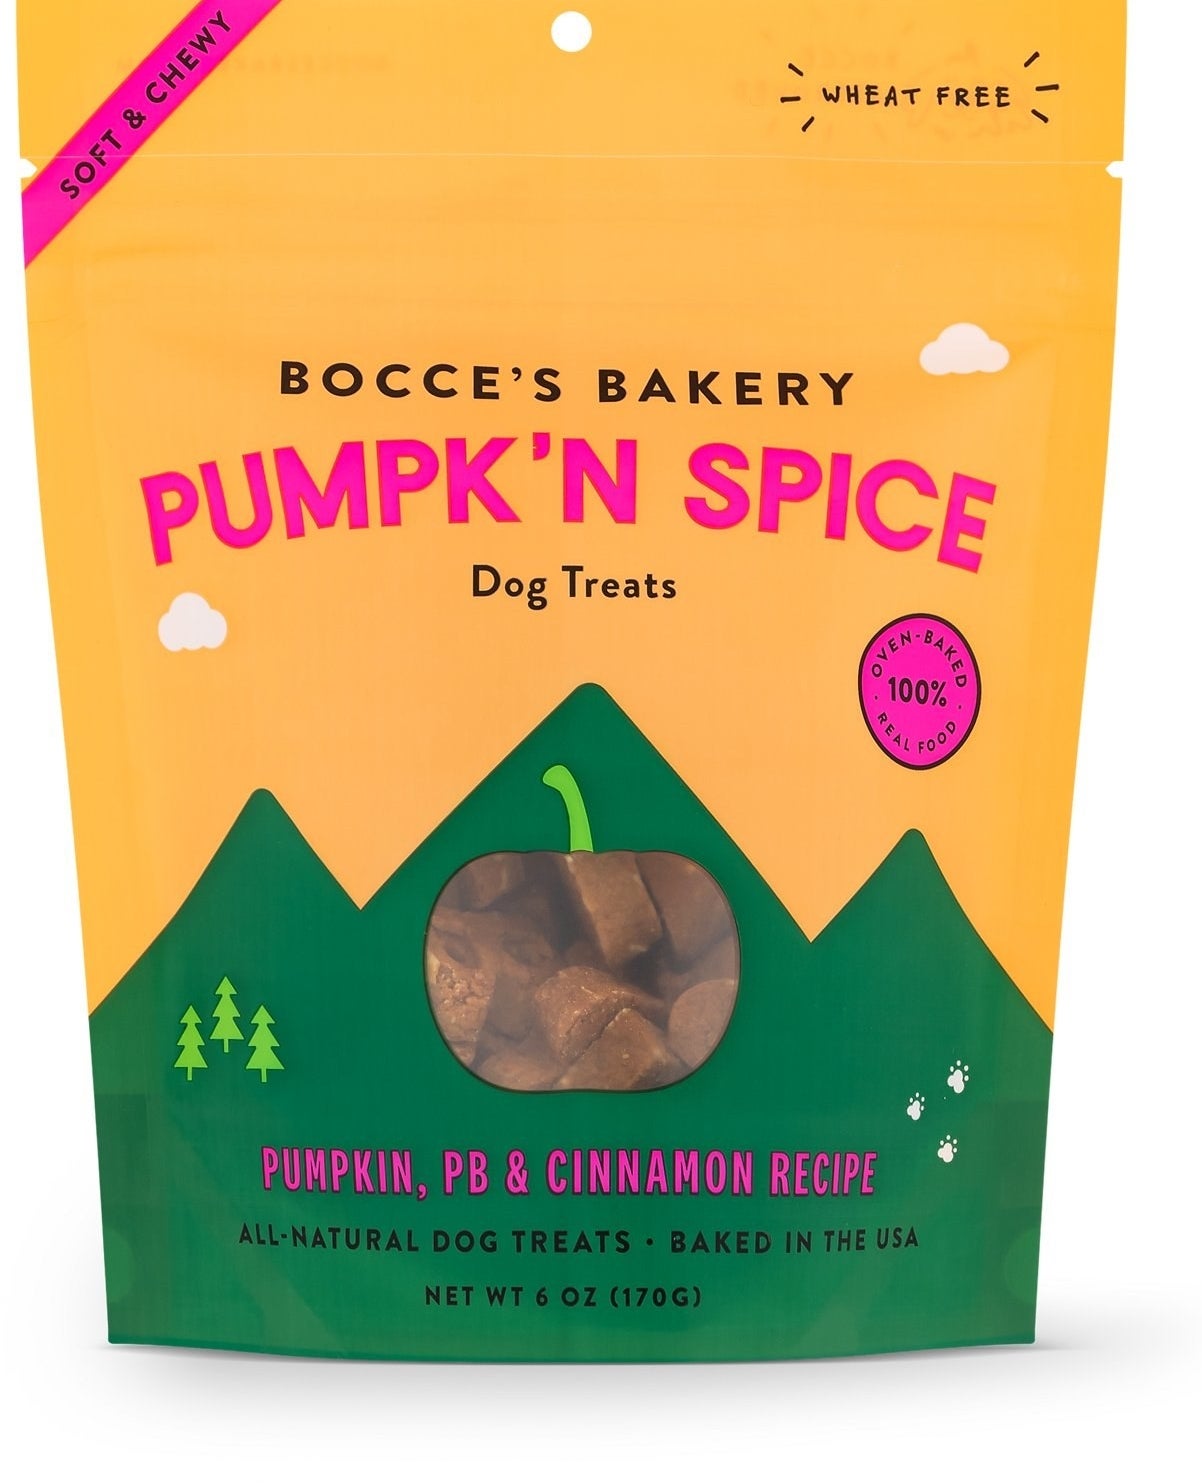 Pumpkin spice dog treats in a bag